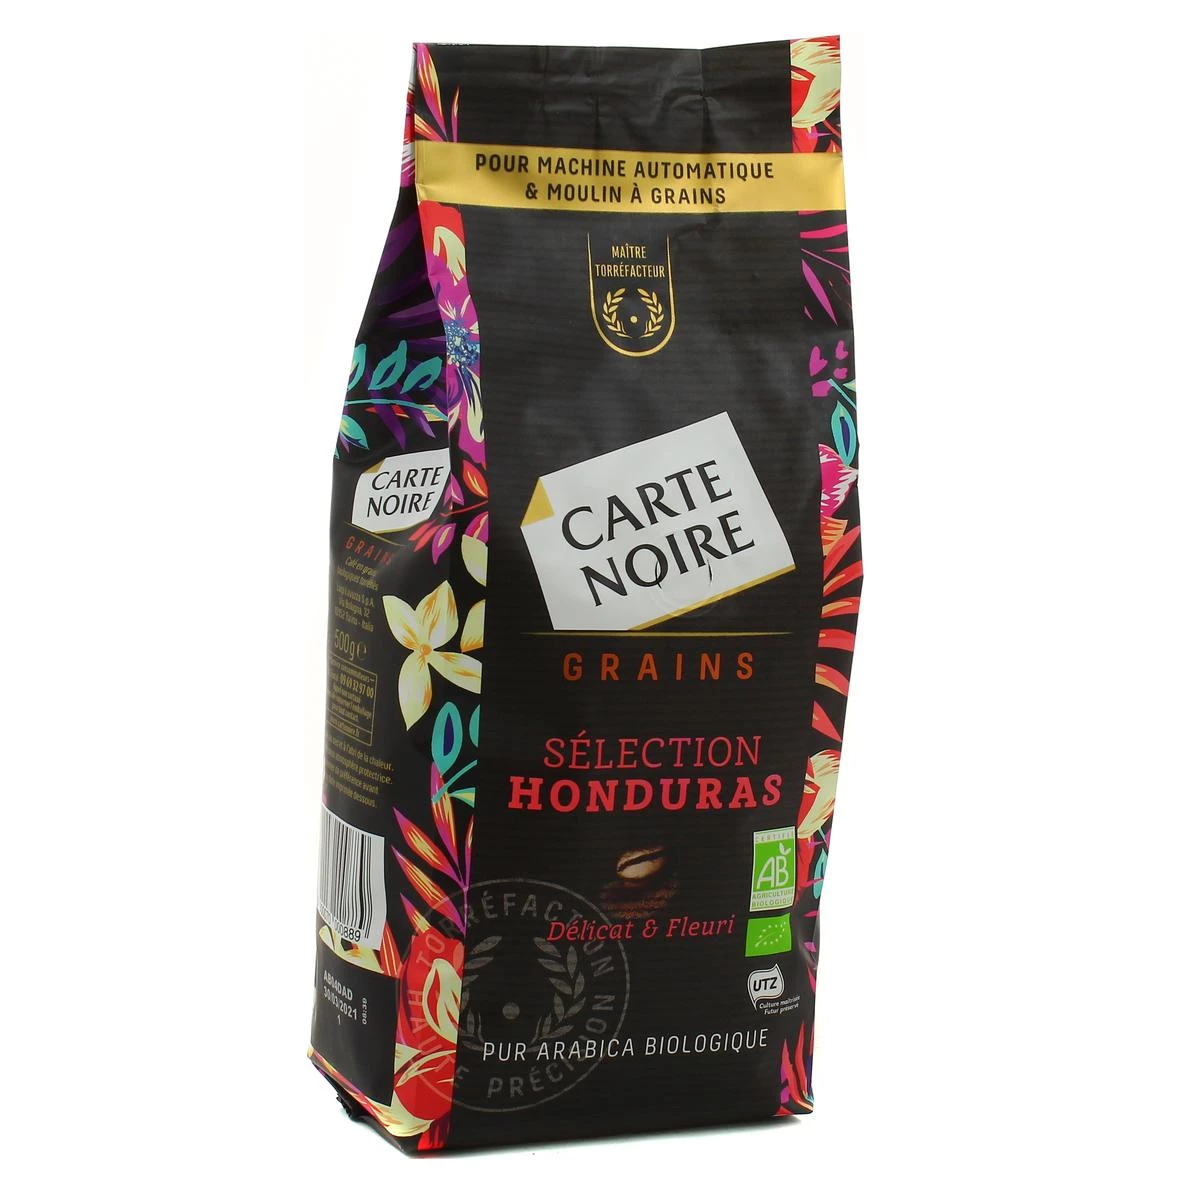 Organic honduras selection coffee beans 500g - CARTE NOIRE